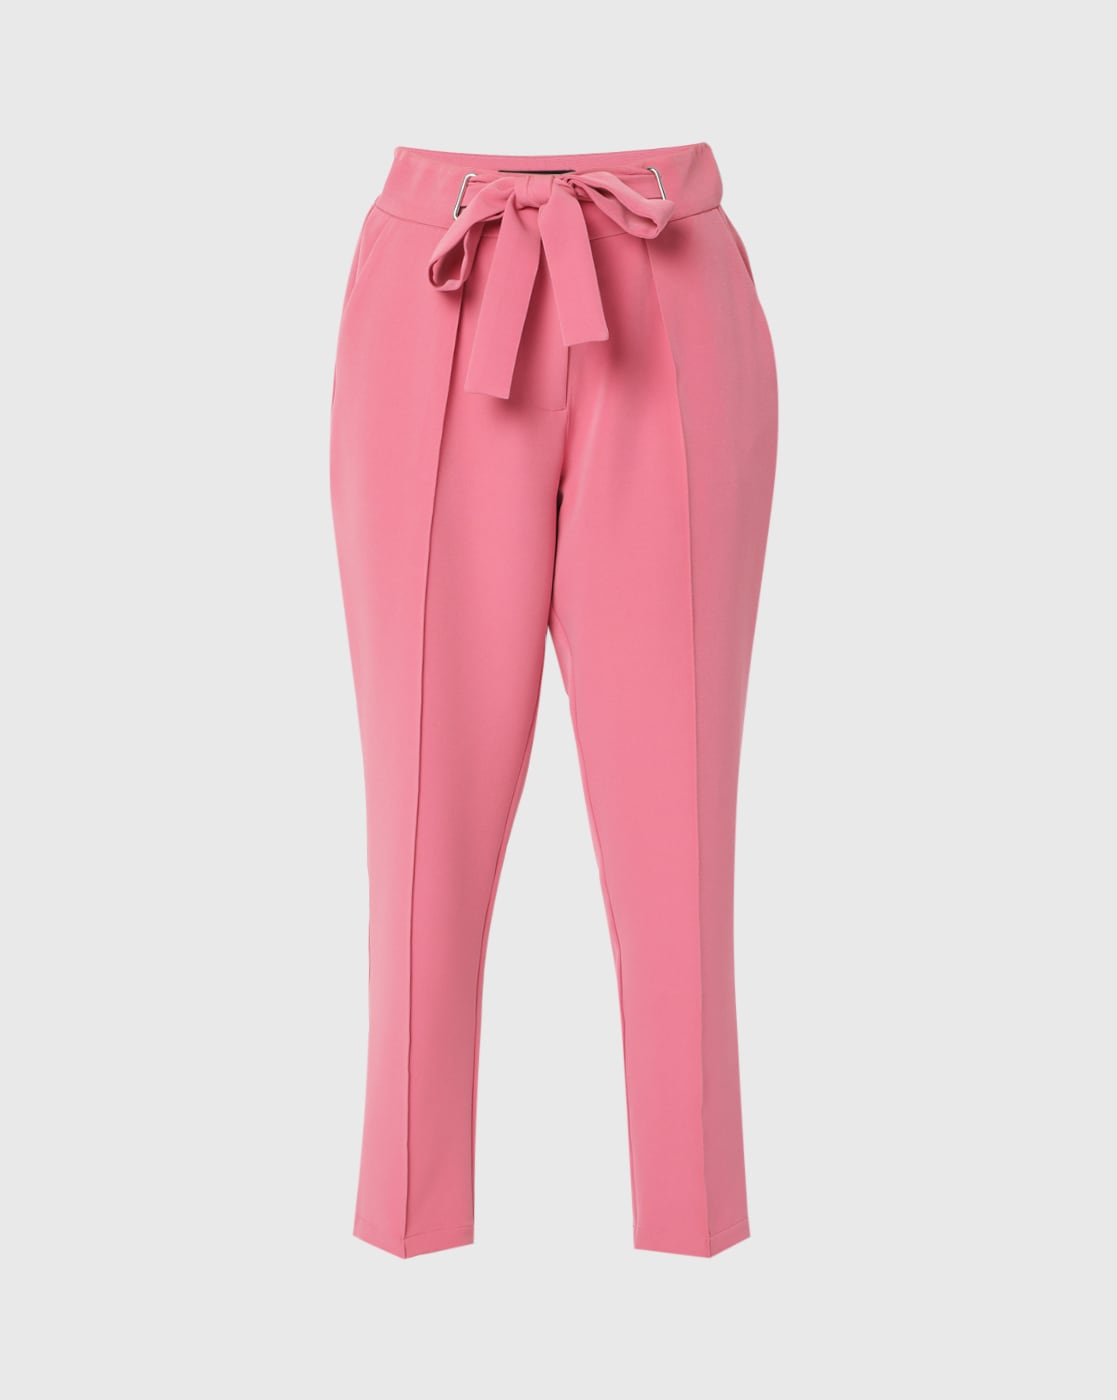 Topshop Pink Tab Waist Wide Leg High Rise Trousers Size 14 Bnwt  eBay